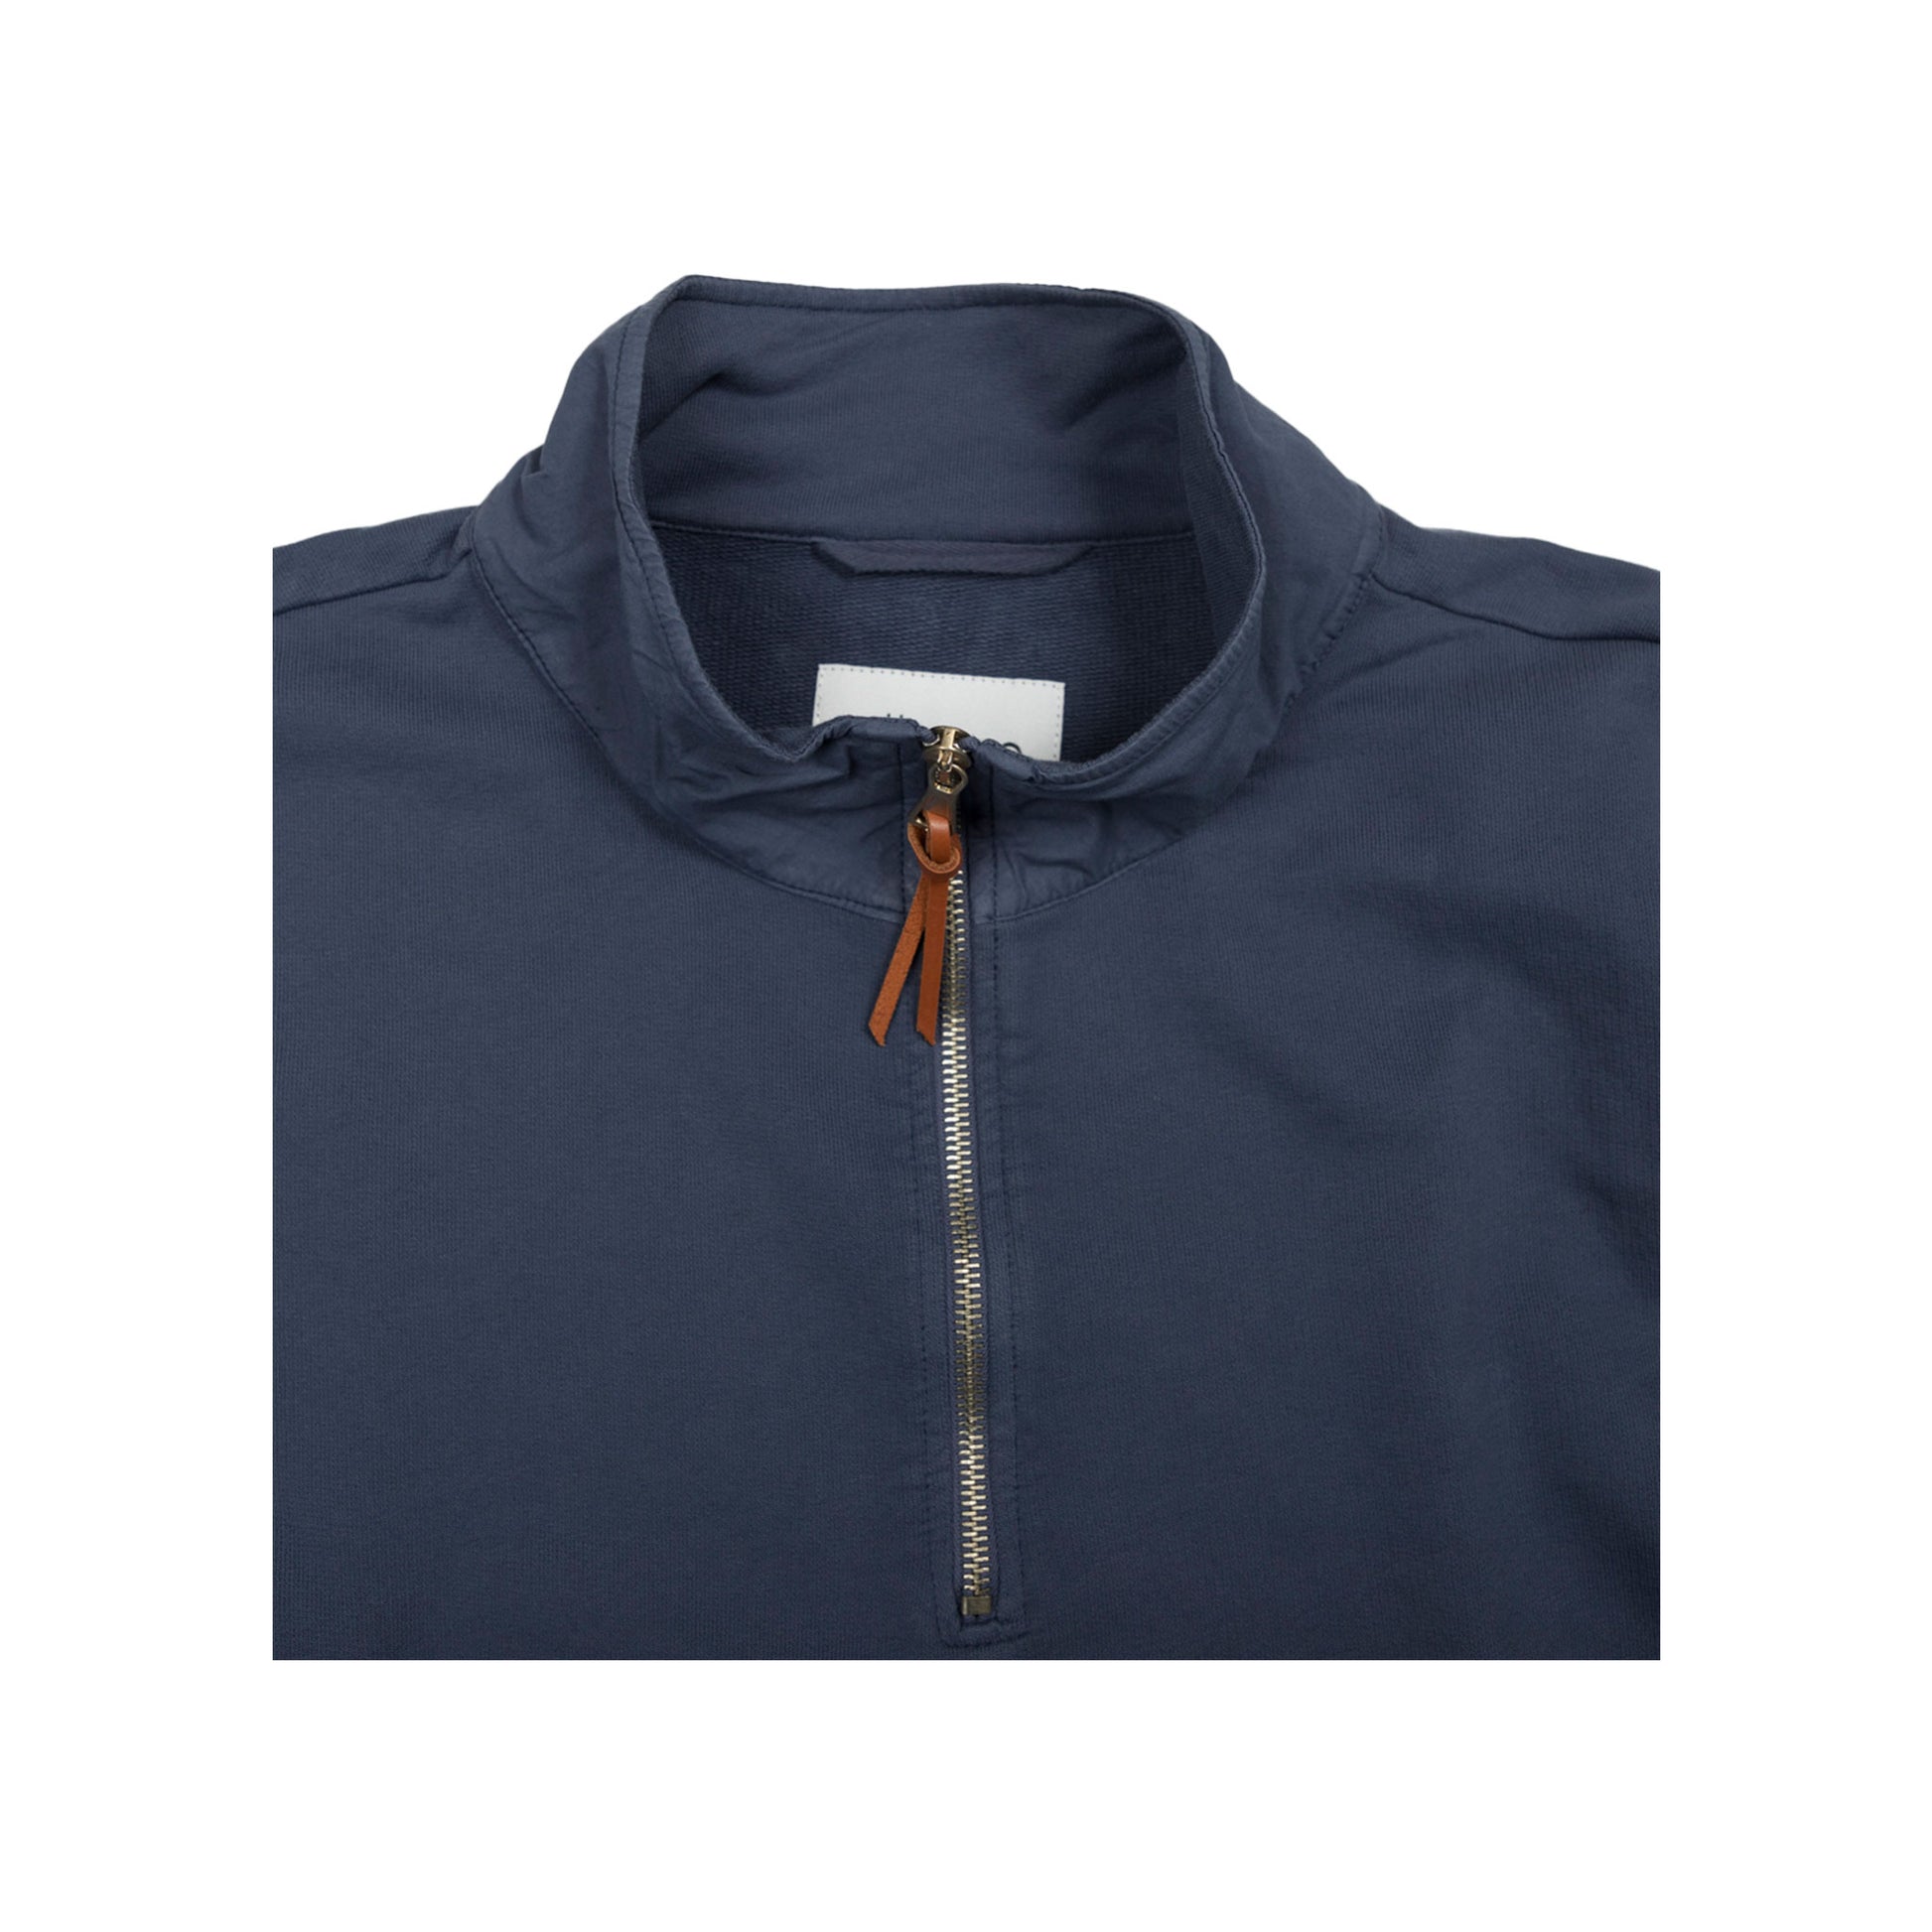 albam zipped jersey pullover in indigo